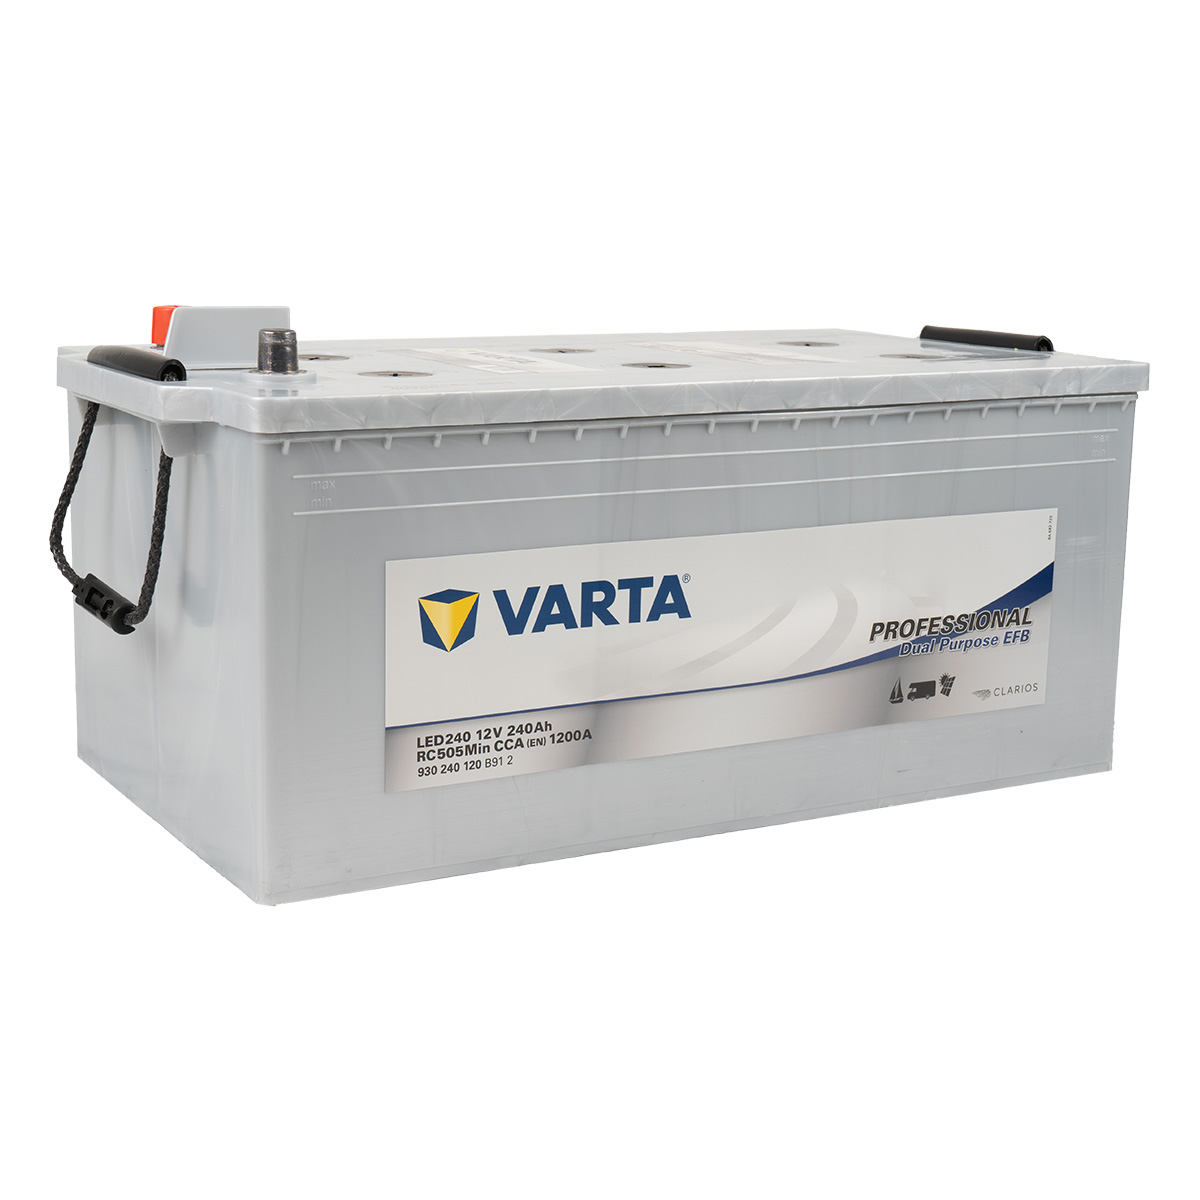 Varta LED240 Professional EFB 12V 240Ah 1200A Versogungsbatterie